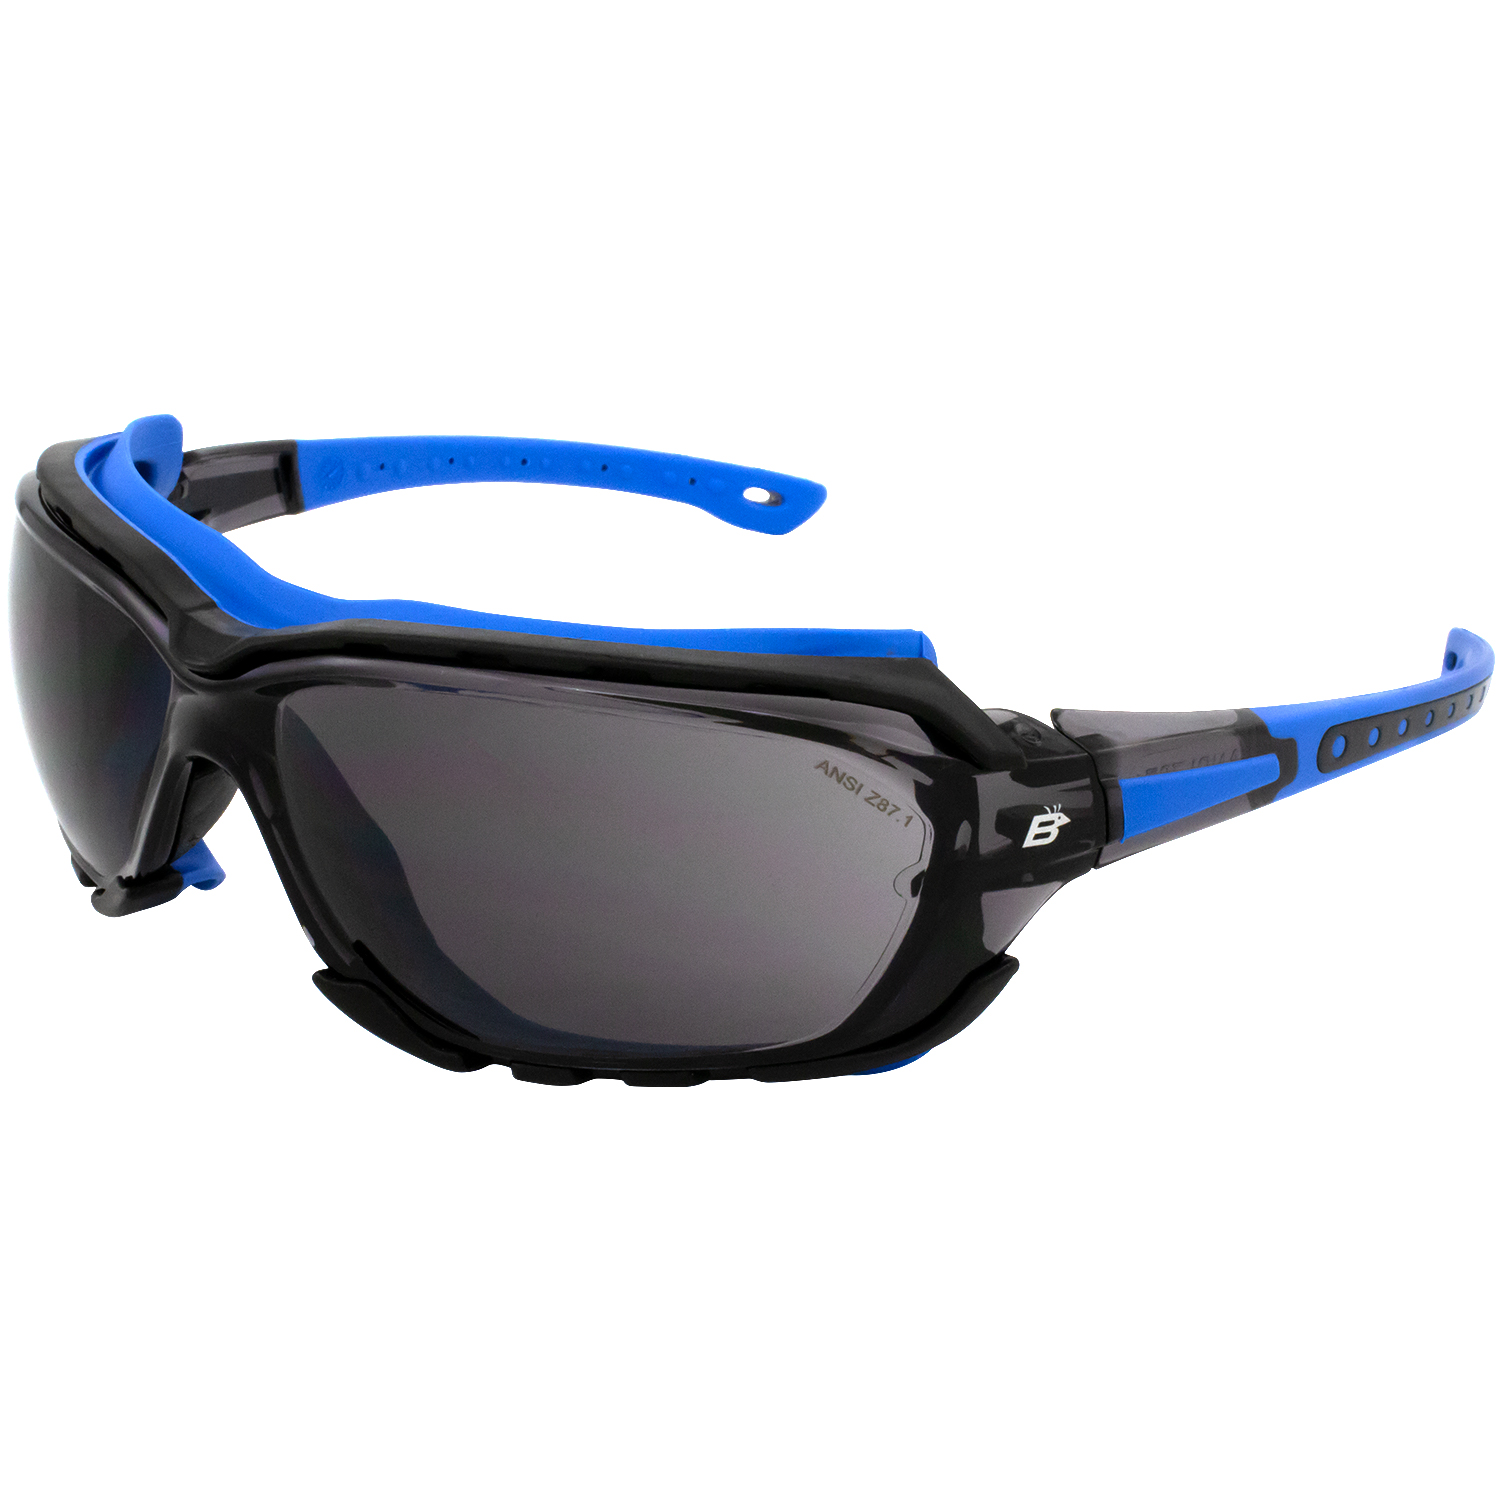 Birdz Eyewear Gasket Safety Padded Motorcycle Sport Sunglasses Blue with Smoke Lens - image 1 of 7